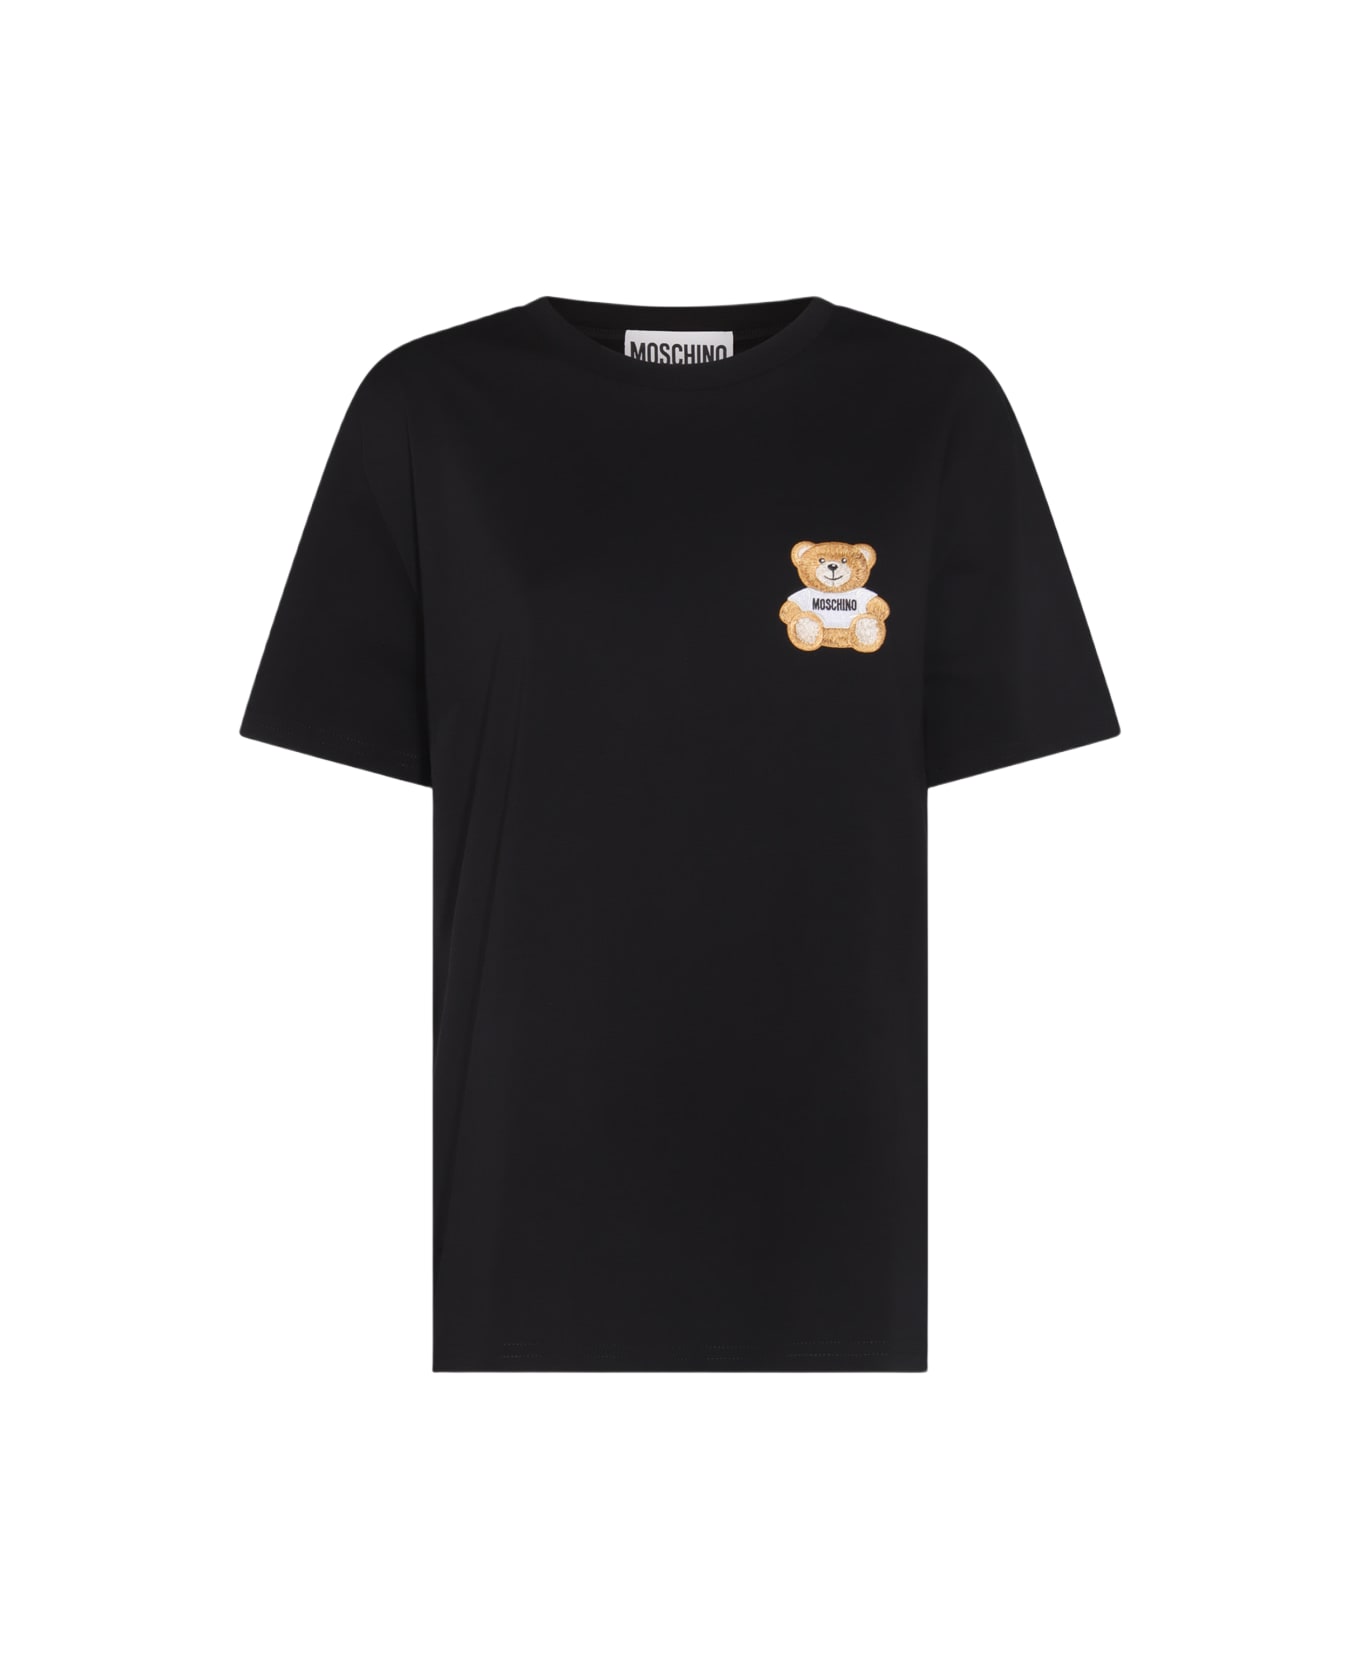 Moschino Black Cotton T-shirt - Nero シャツ